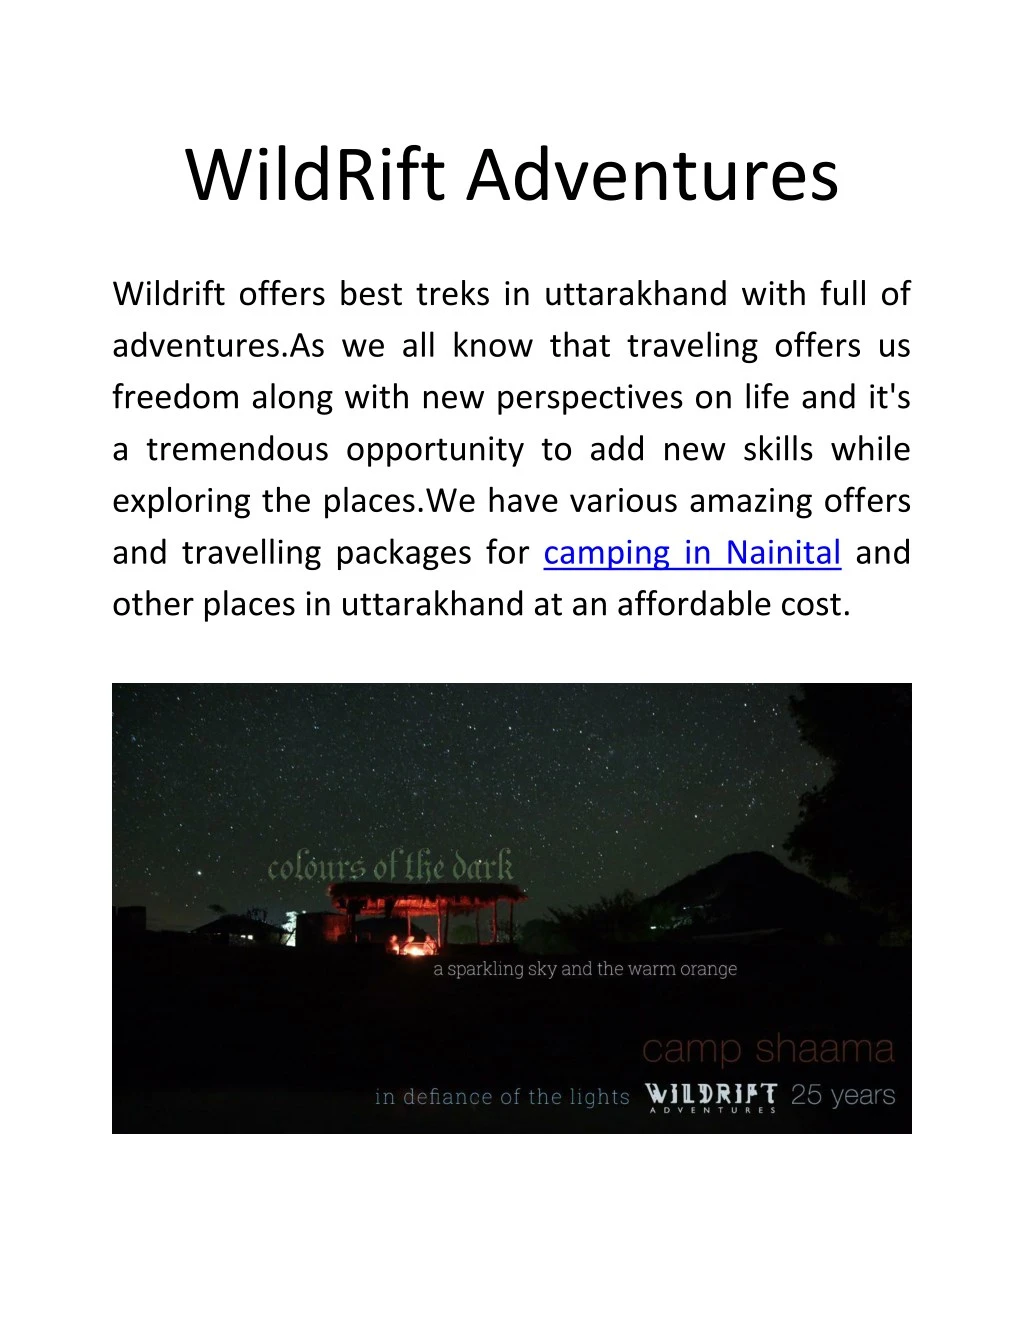 wildrift adventures